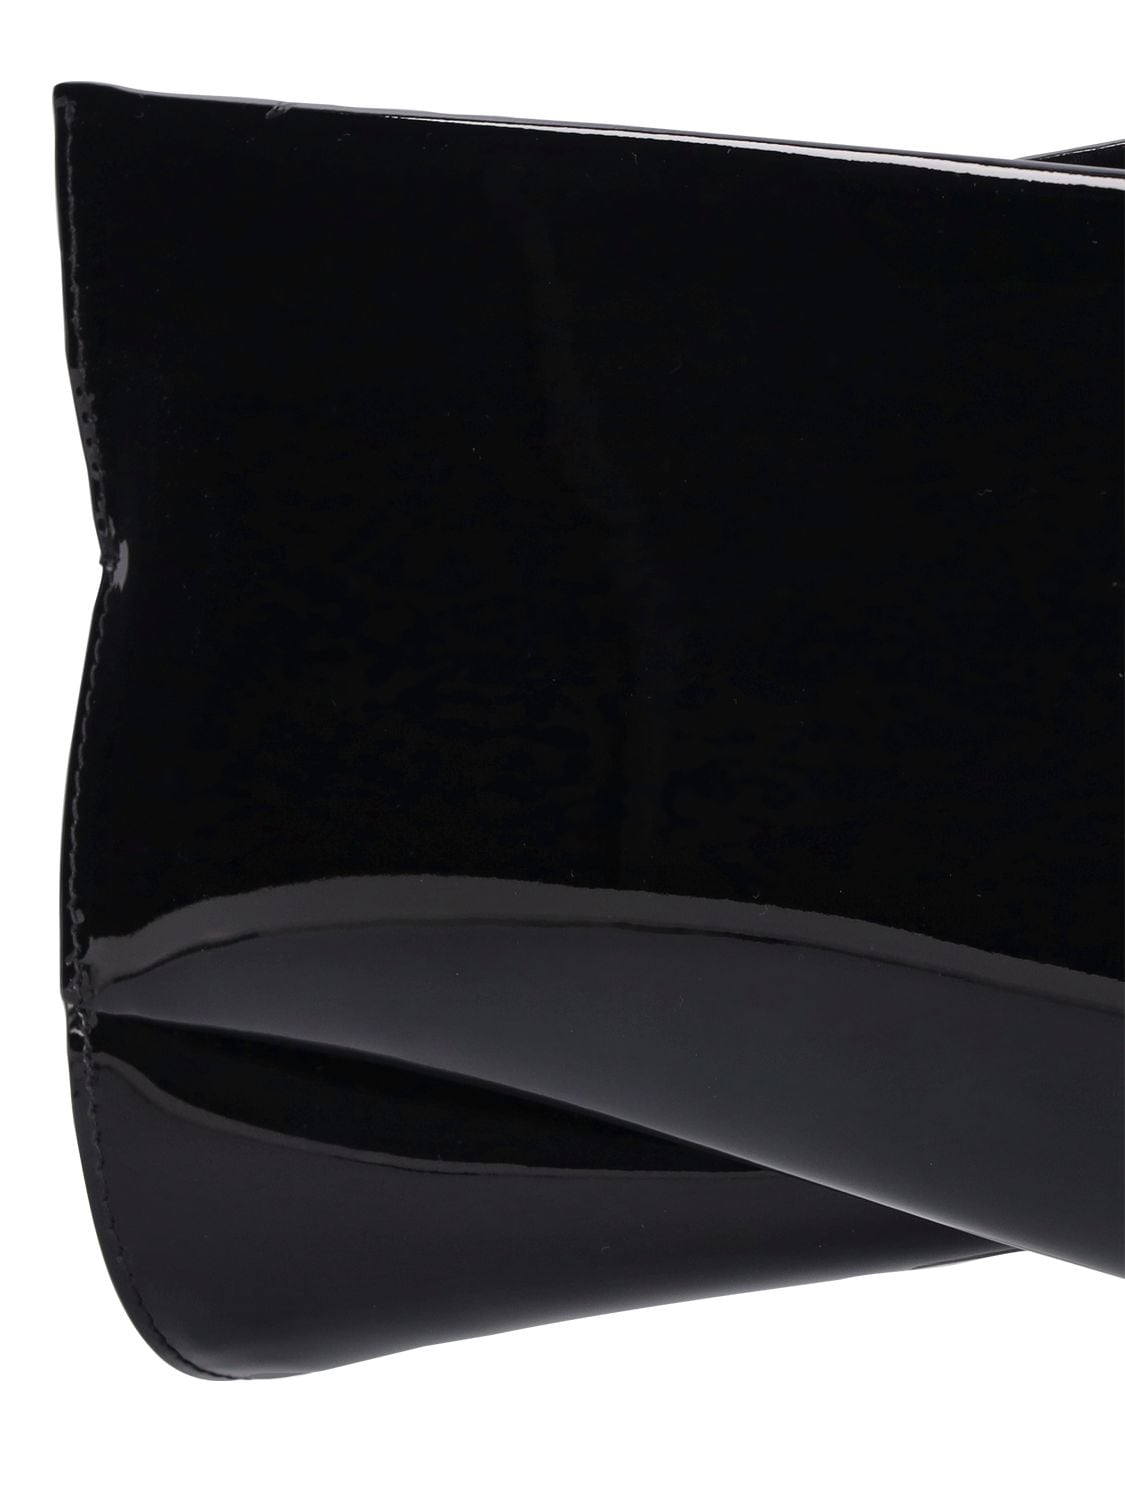 Christian Louboutin Loubitwist Patent Leather Clutch Black